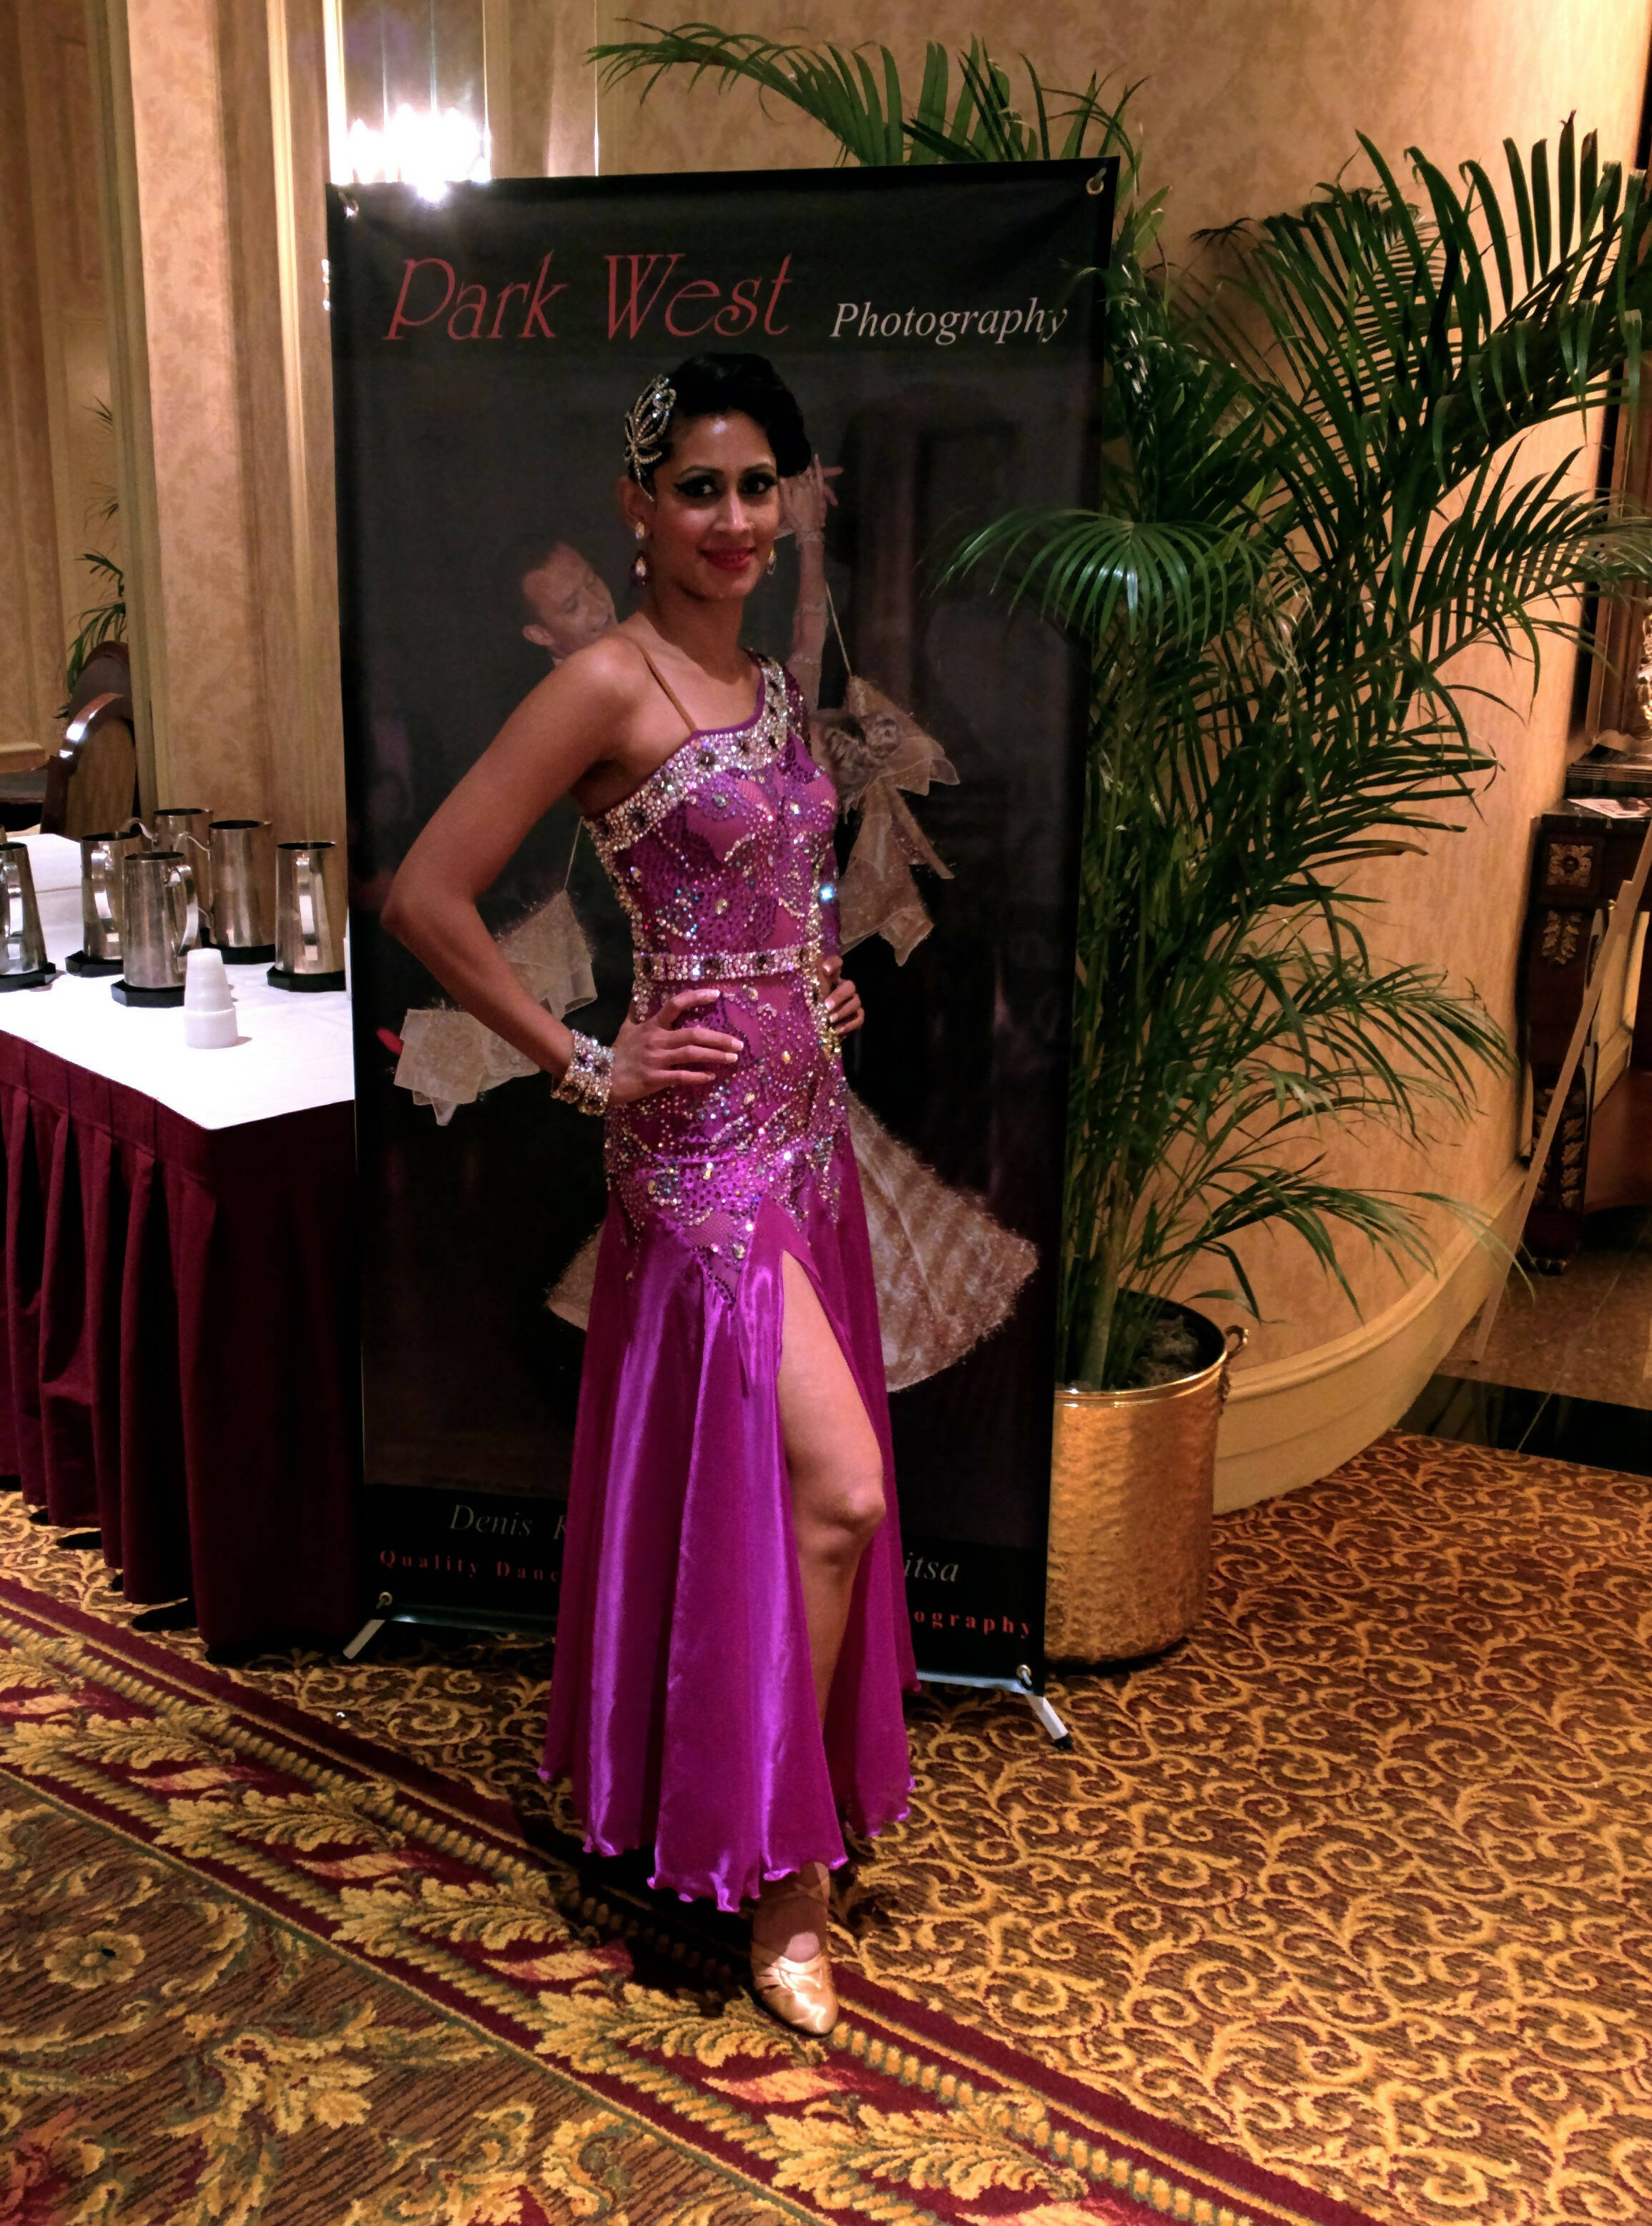 Purple Smooth Dress with Swarovski Crystals (ballroom gown, modern, smooth)